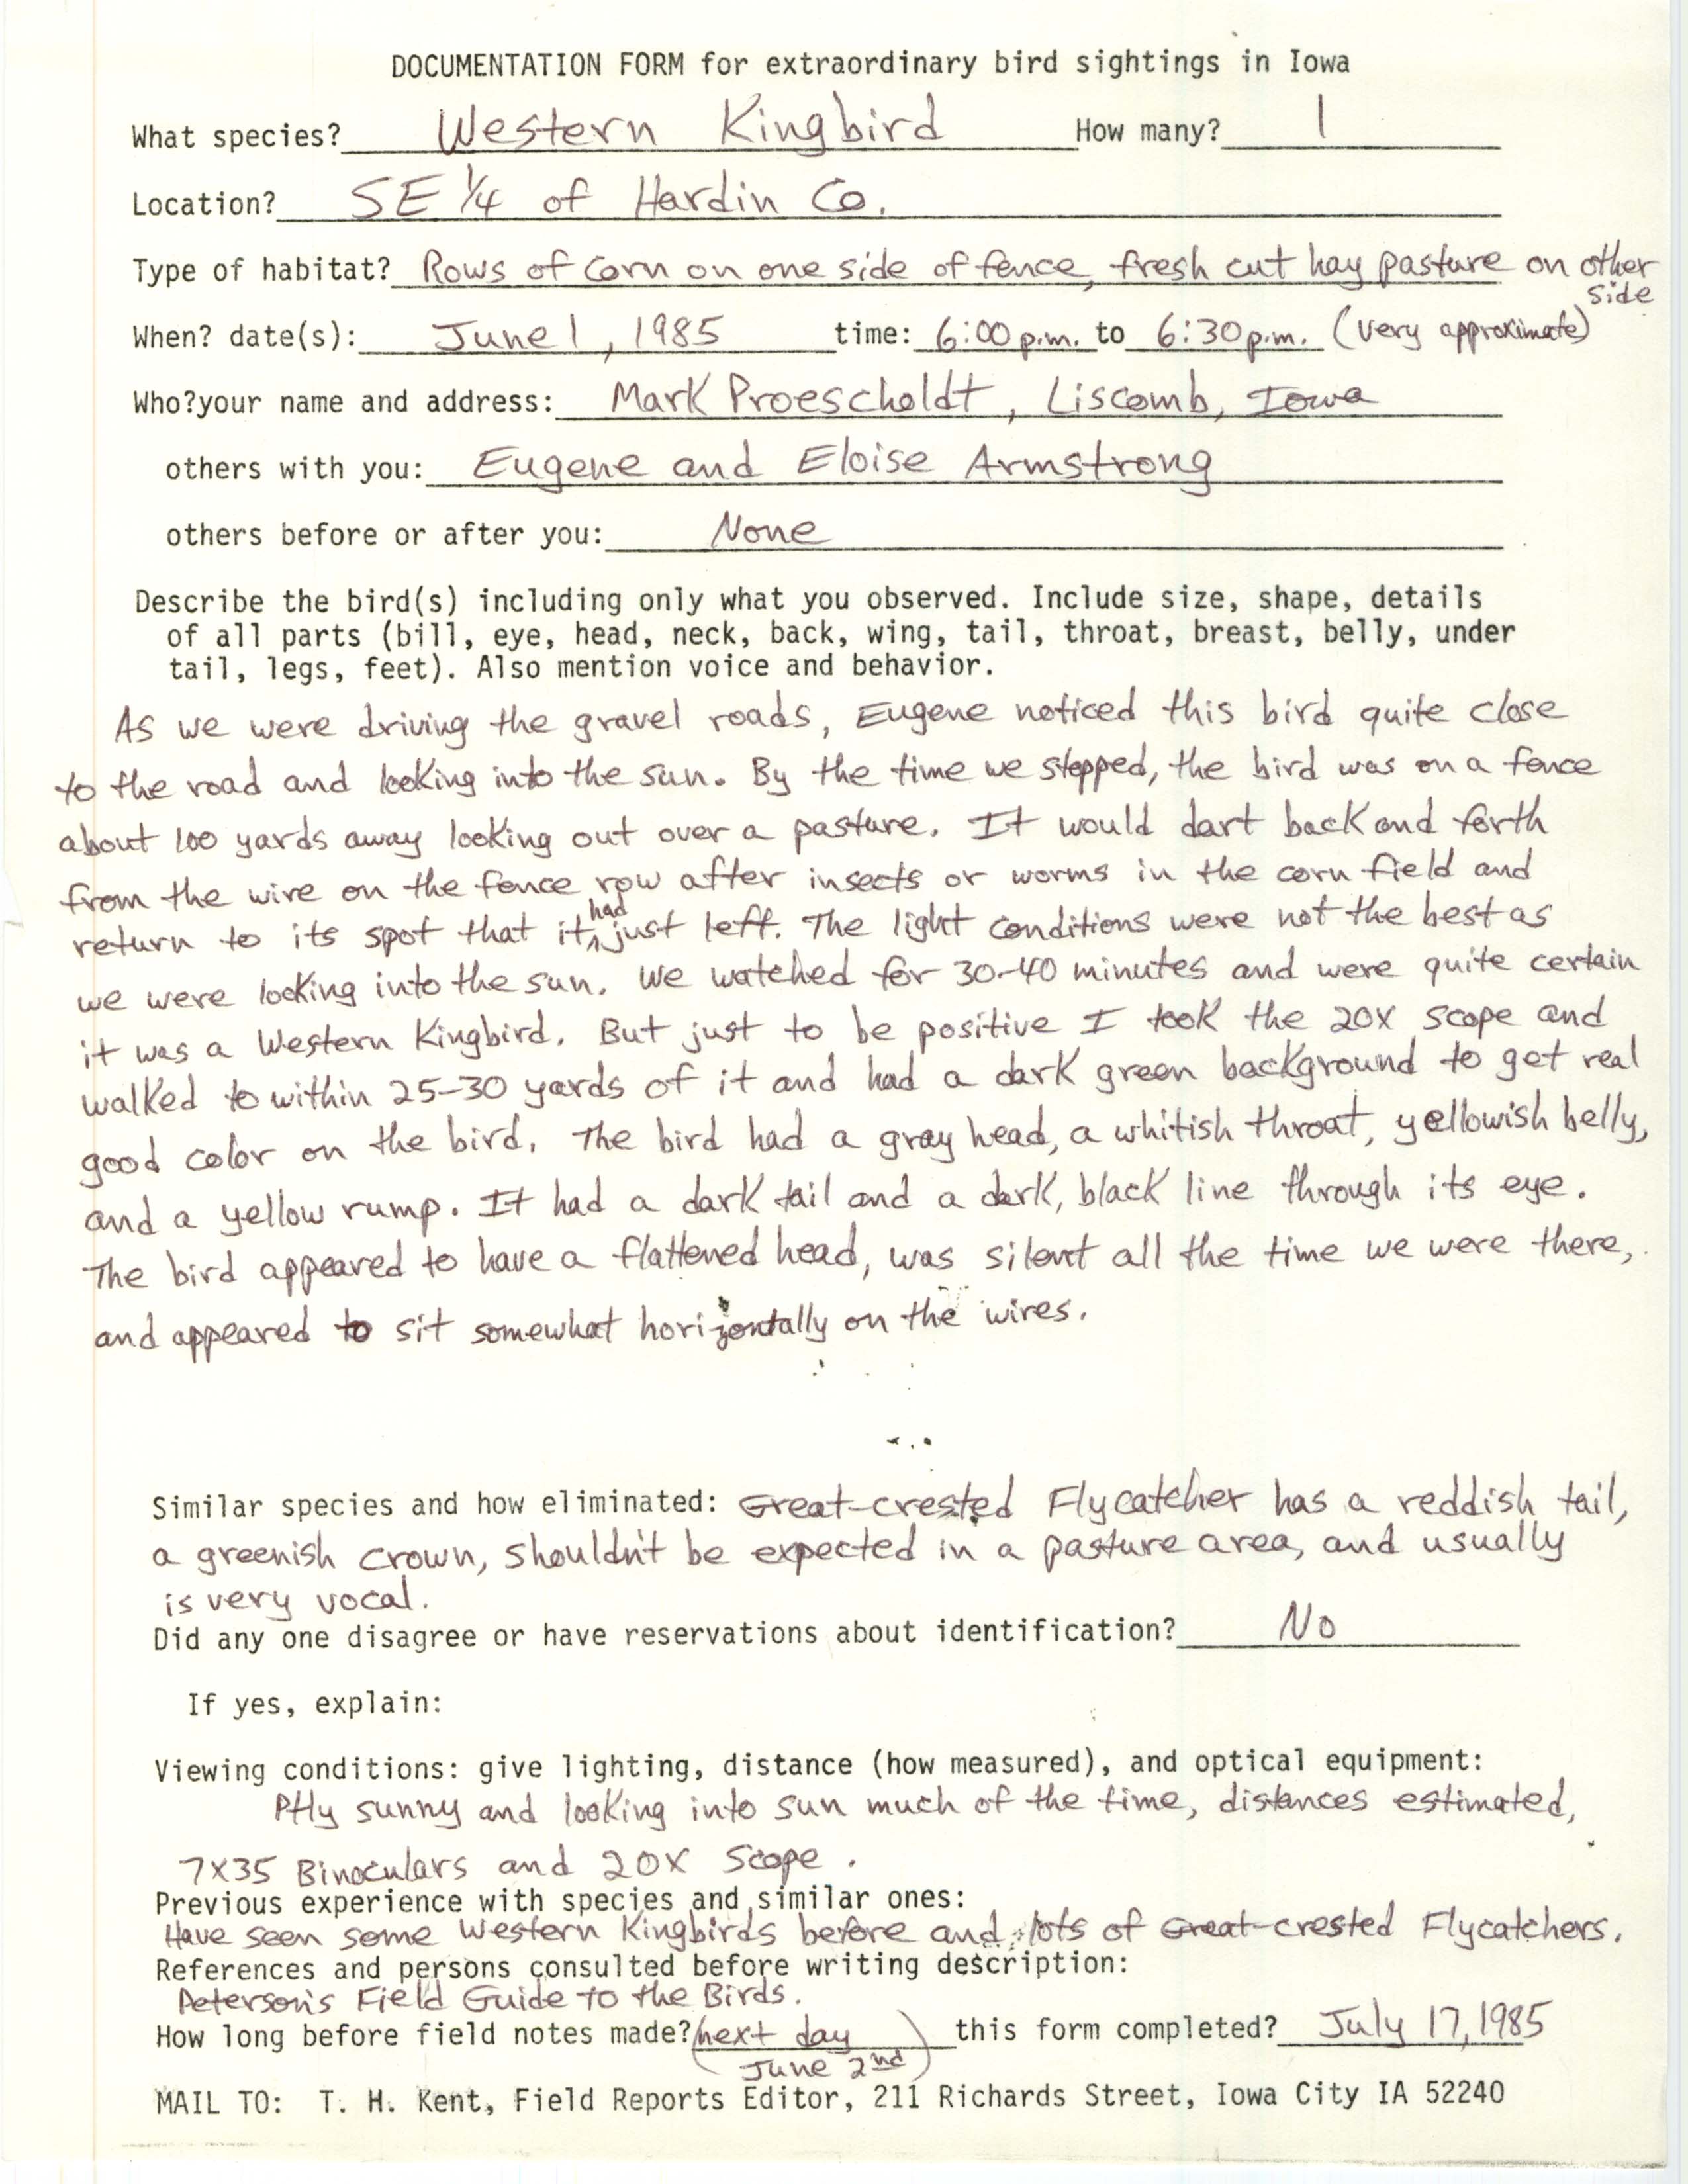 Rare bird documentation form for Western Kingbird at southeastern Hardin County, 1985